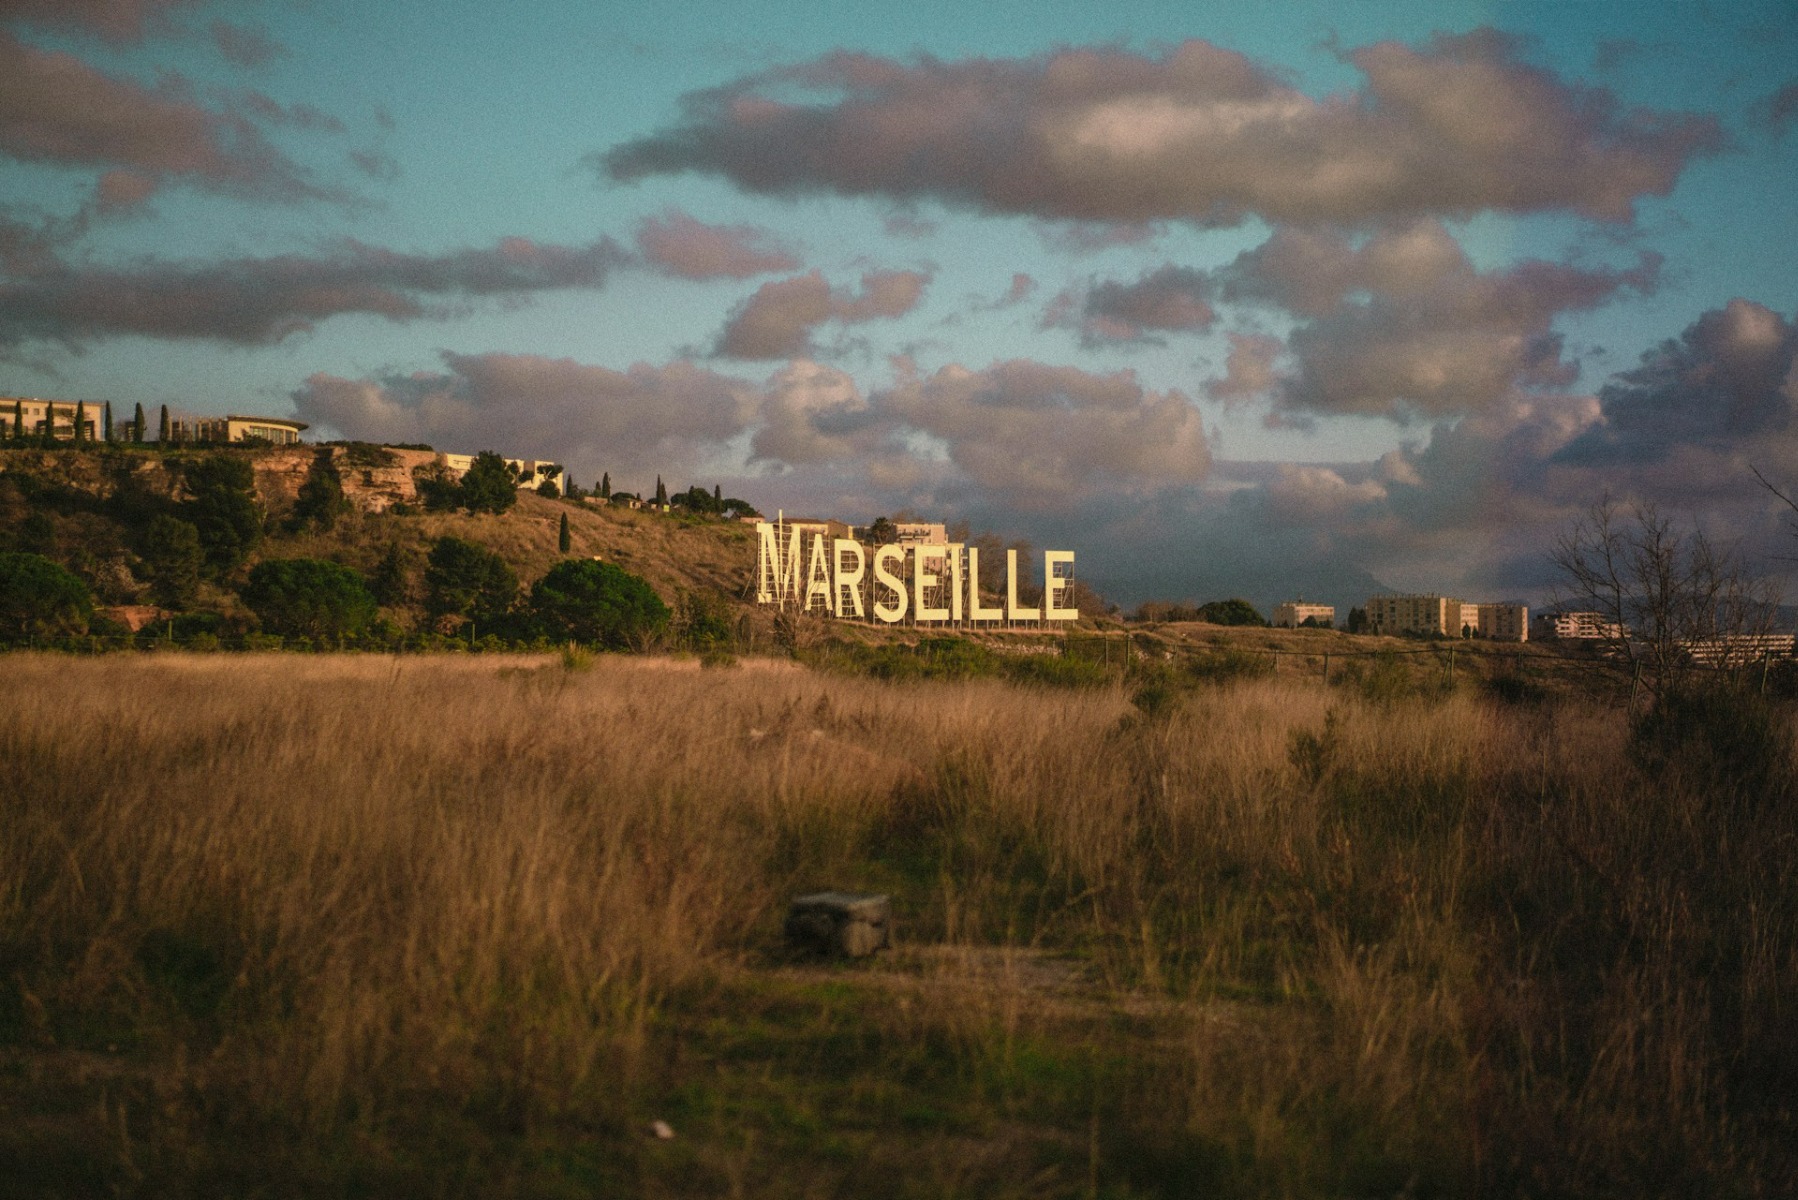 Marseille Sign